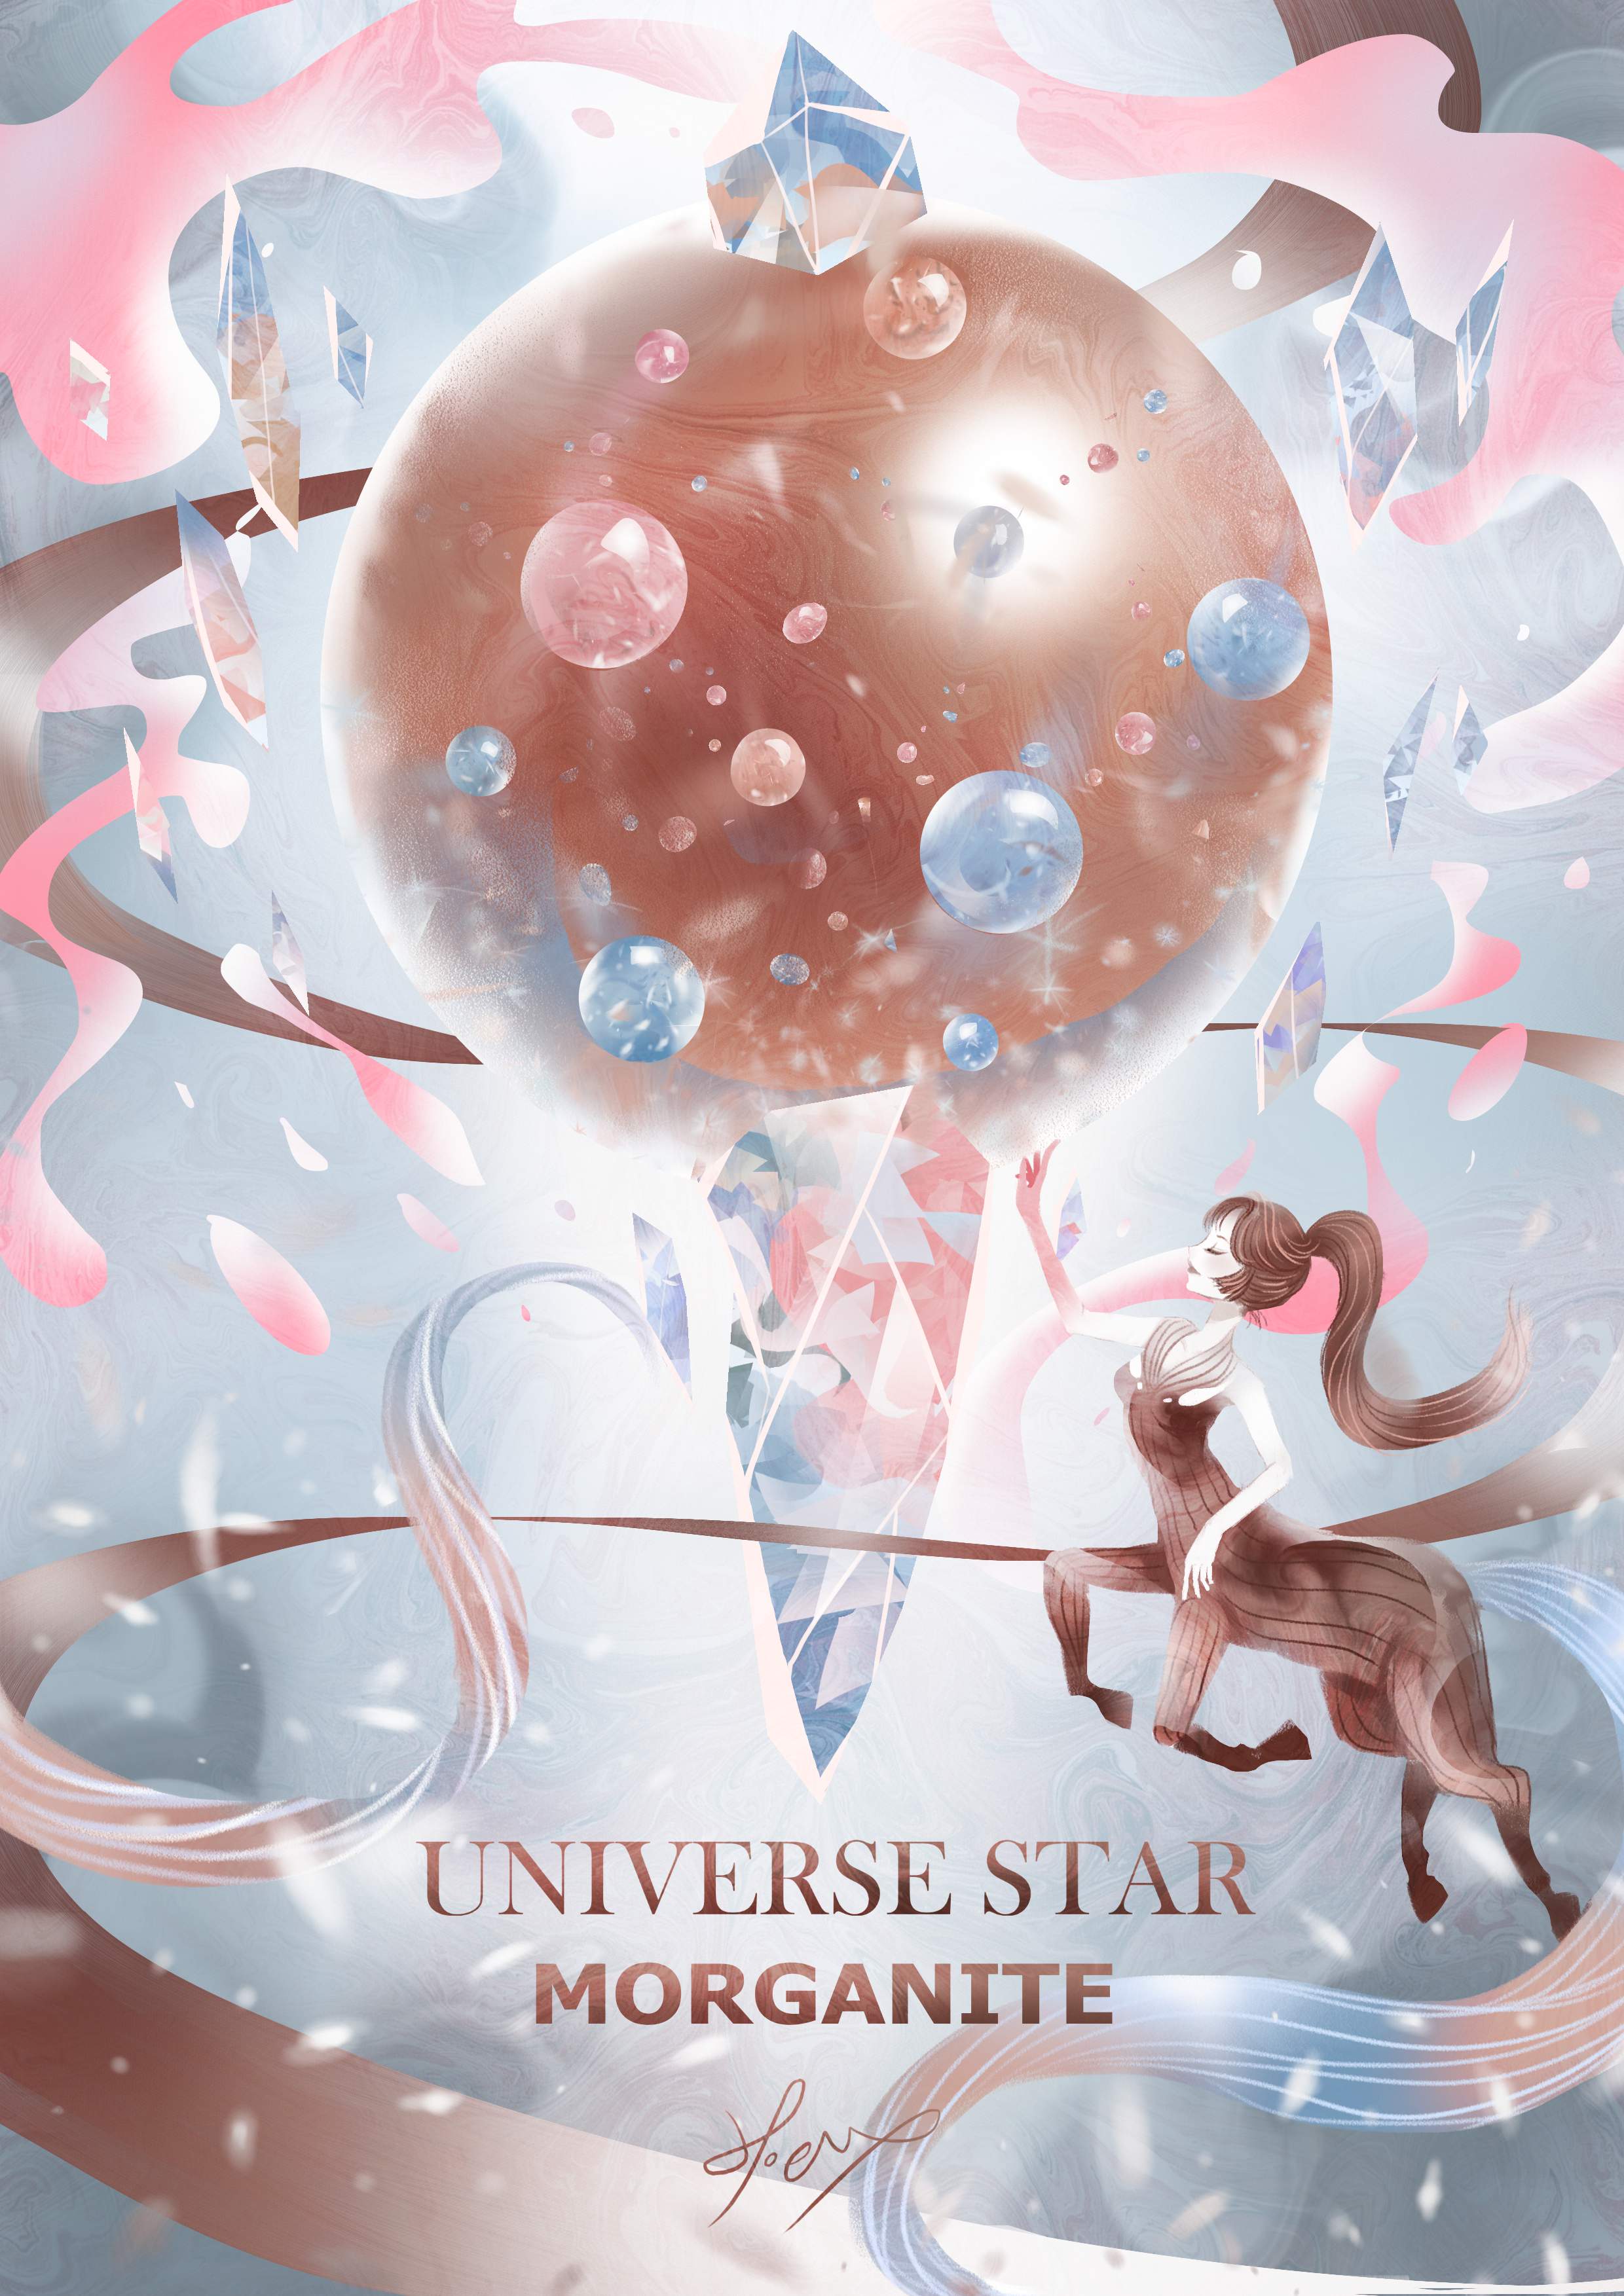 Universe Star 夢宇宙星球 -摩根星Morganite-Hoelex.jpg